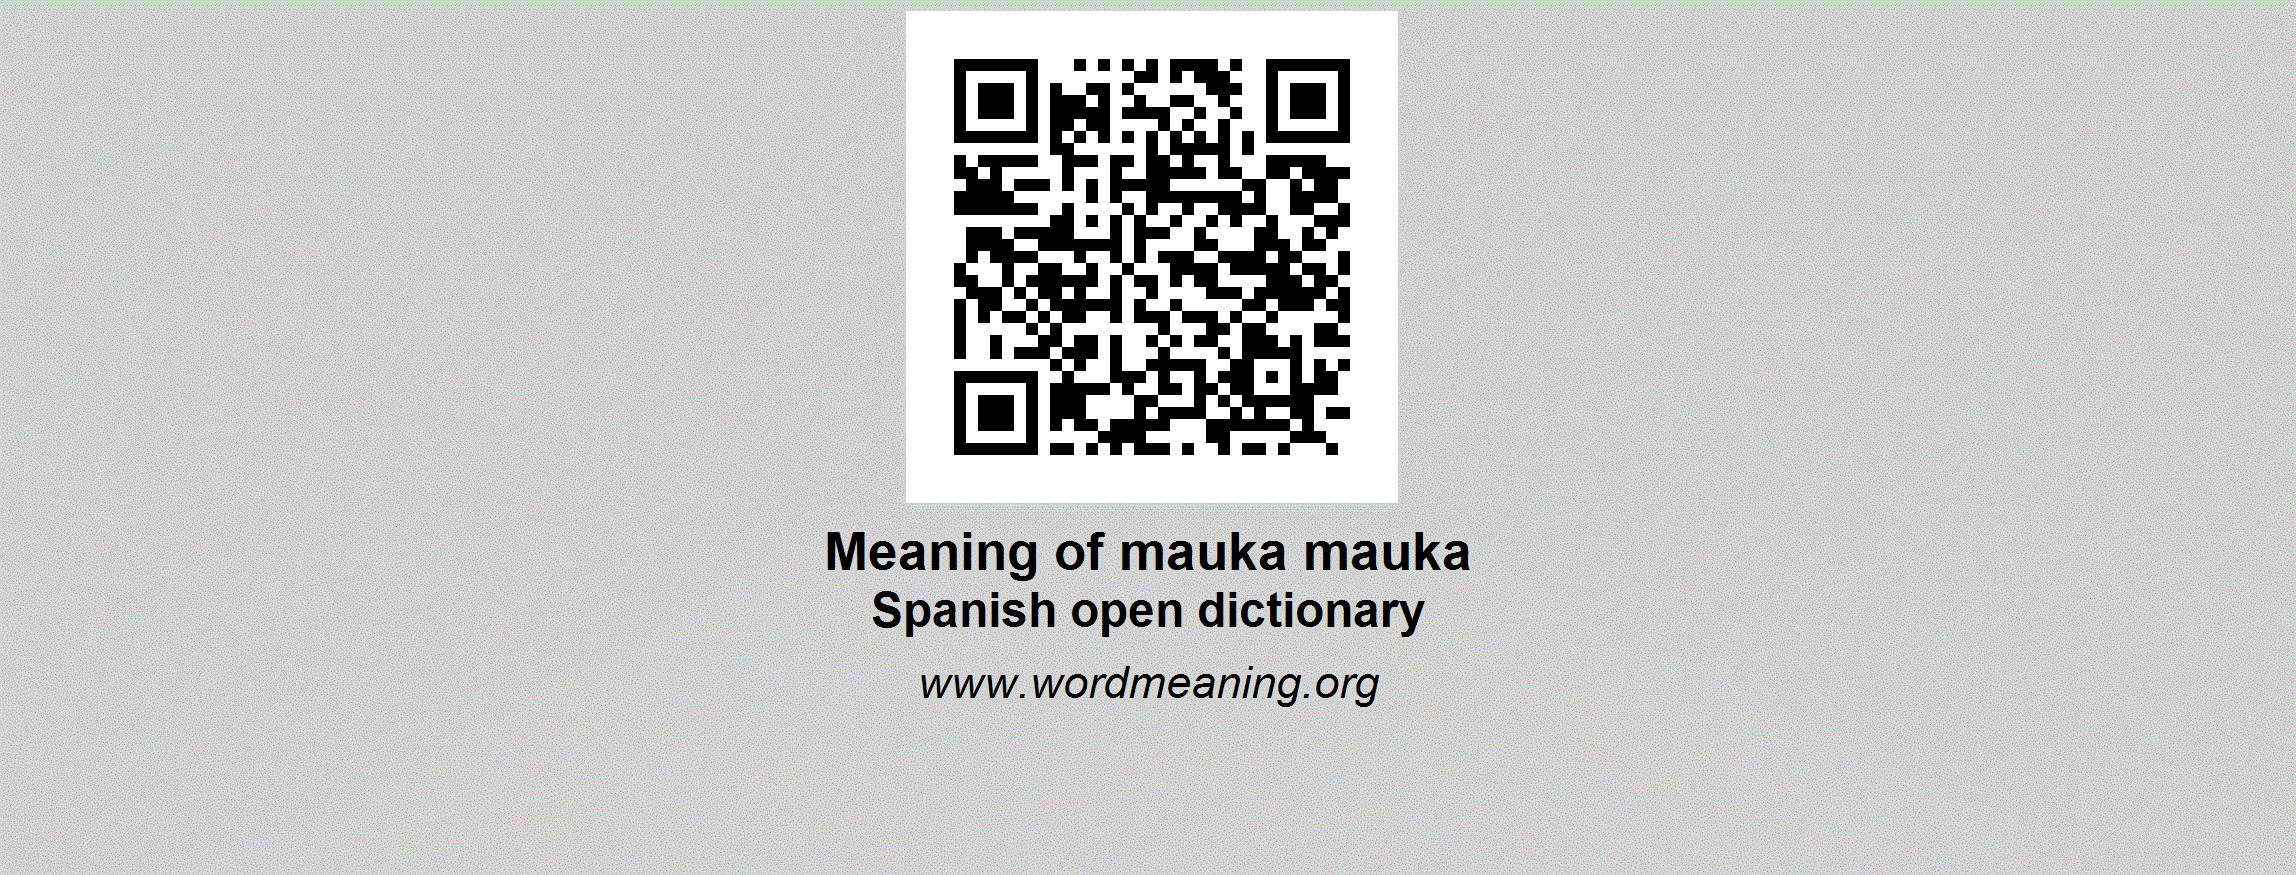 mauka meaning